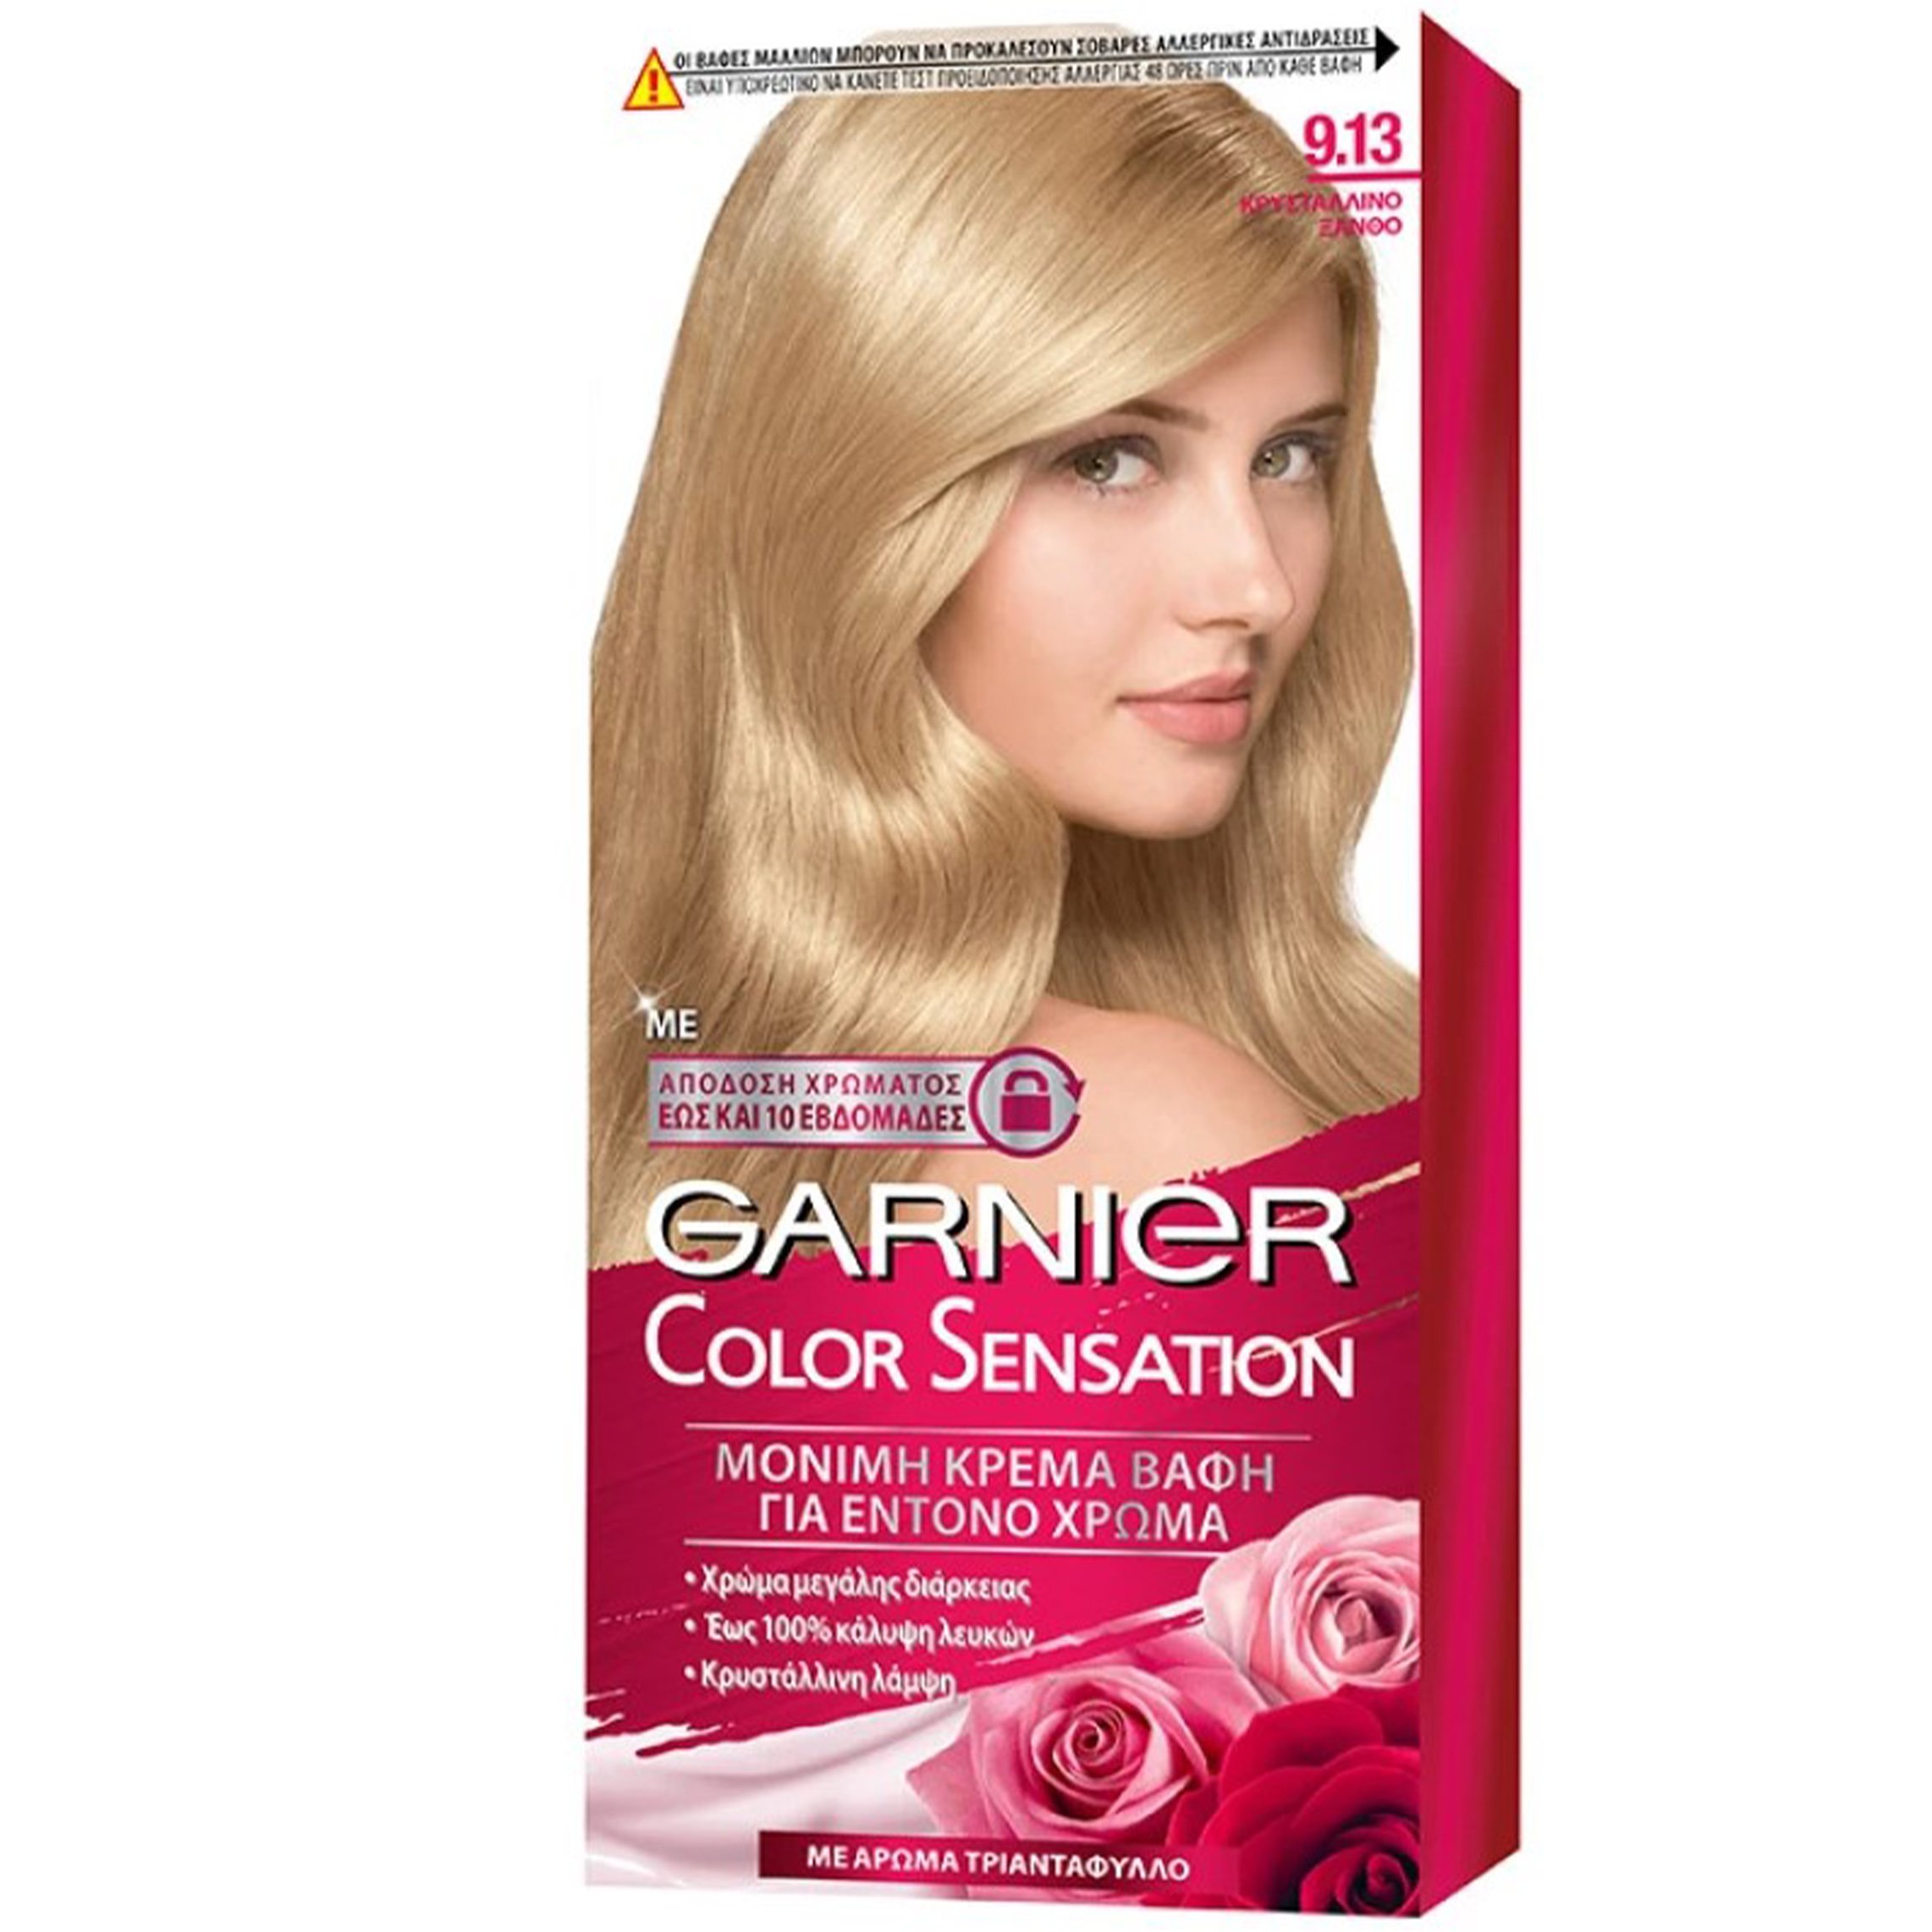 Garnier Color Sensation Permanent Hair Color Kit Μόνιμη Κρέμα Βαφή Μαλλιών με Άρωμα Τριαντάφυλλο 1 Τεμάχιο – 9.13 Κρυστάλλινο Ξανθό